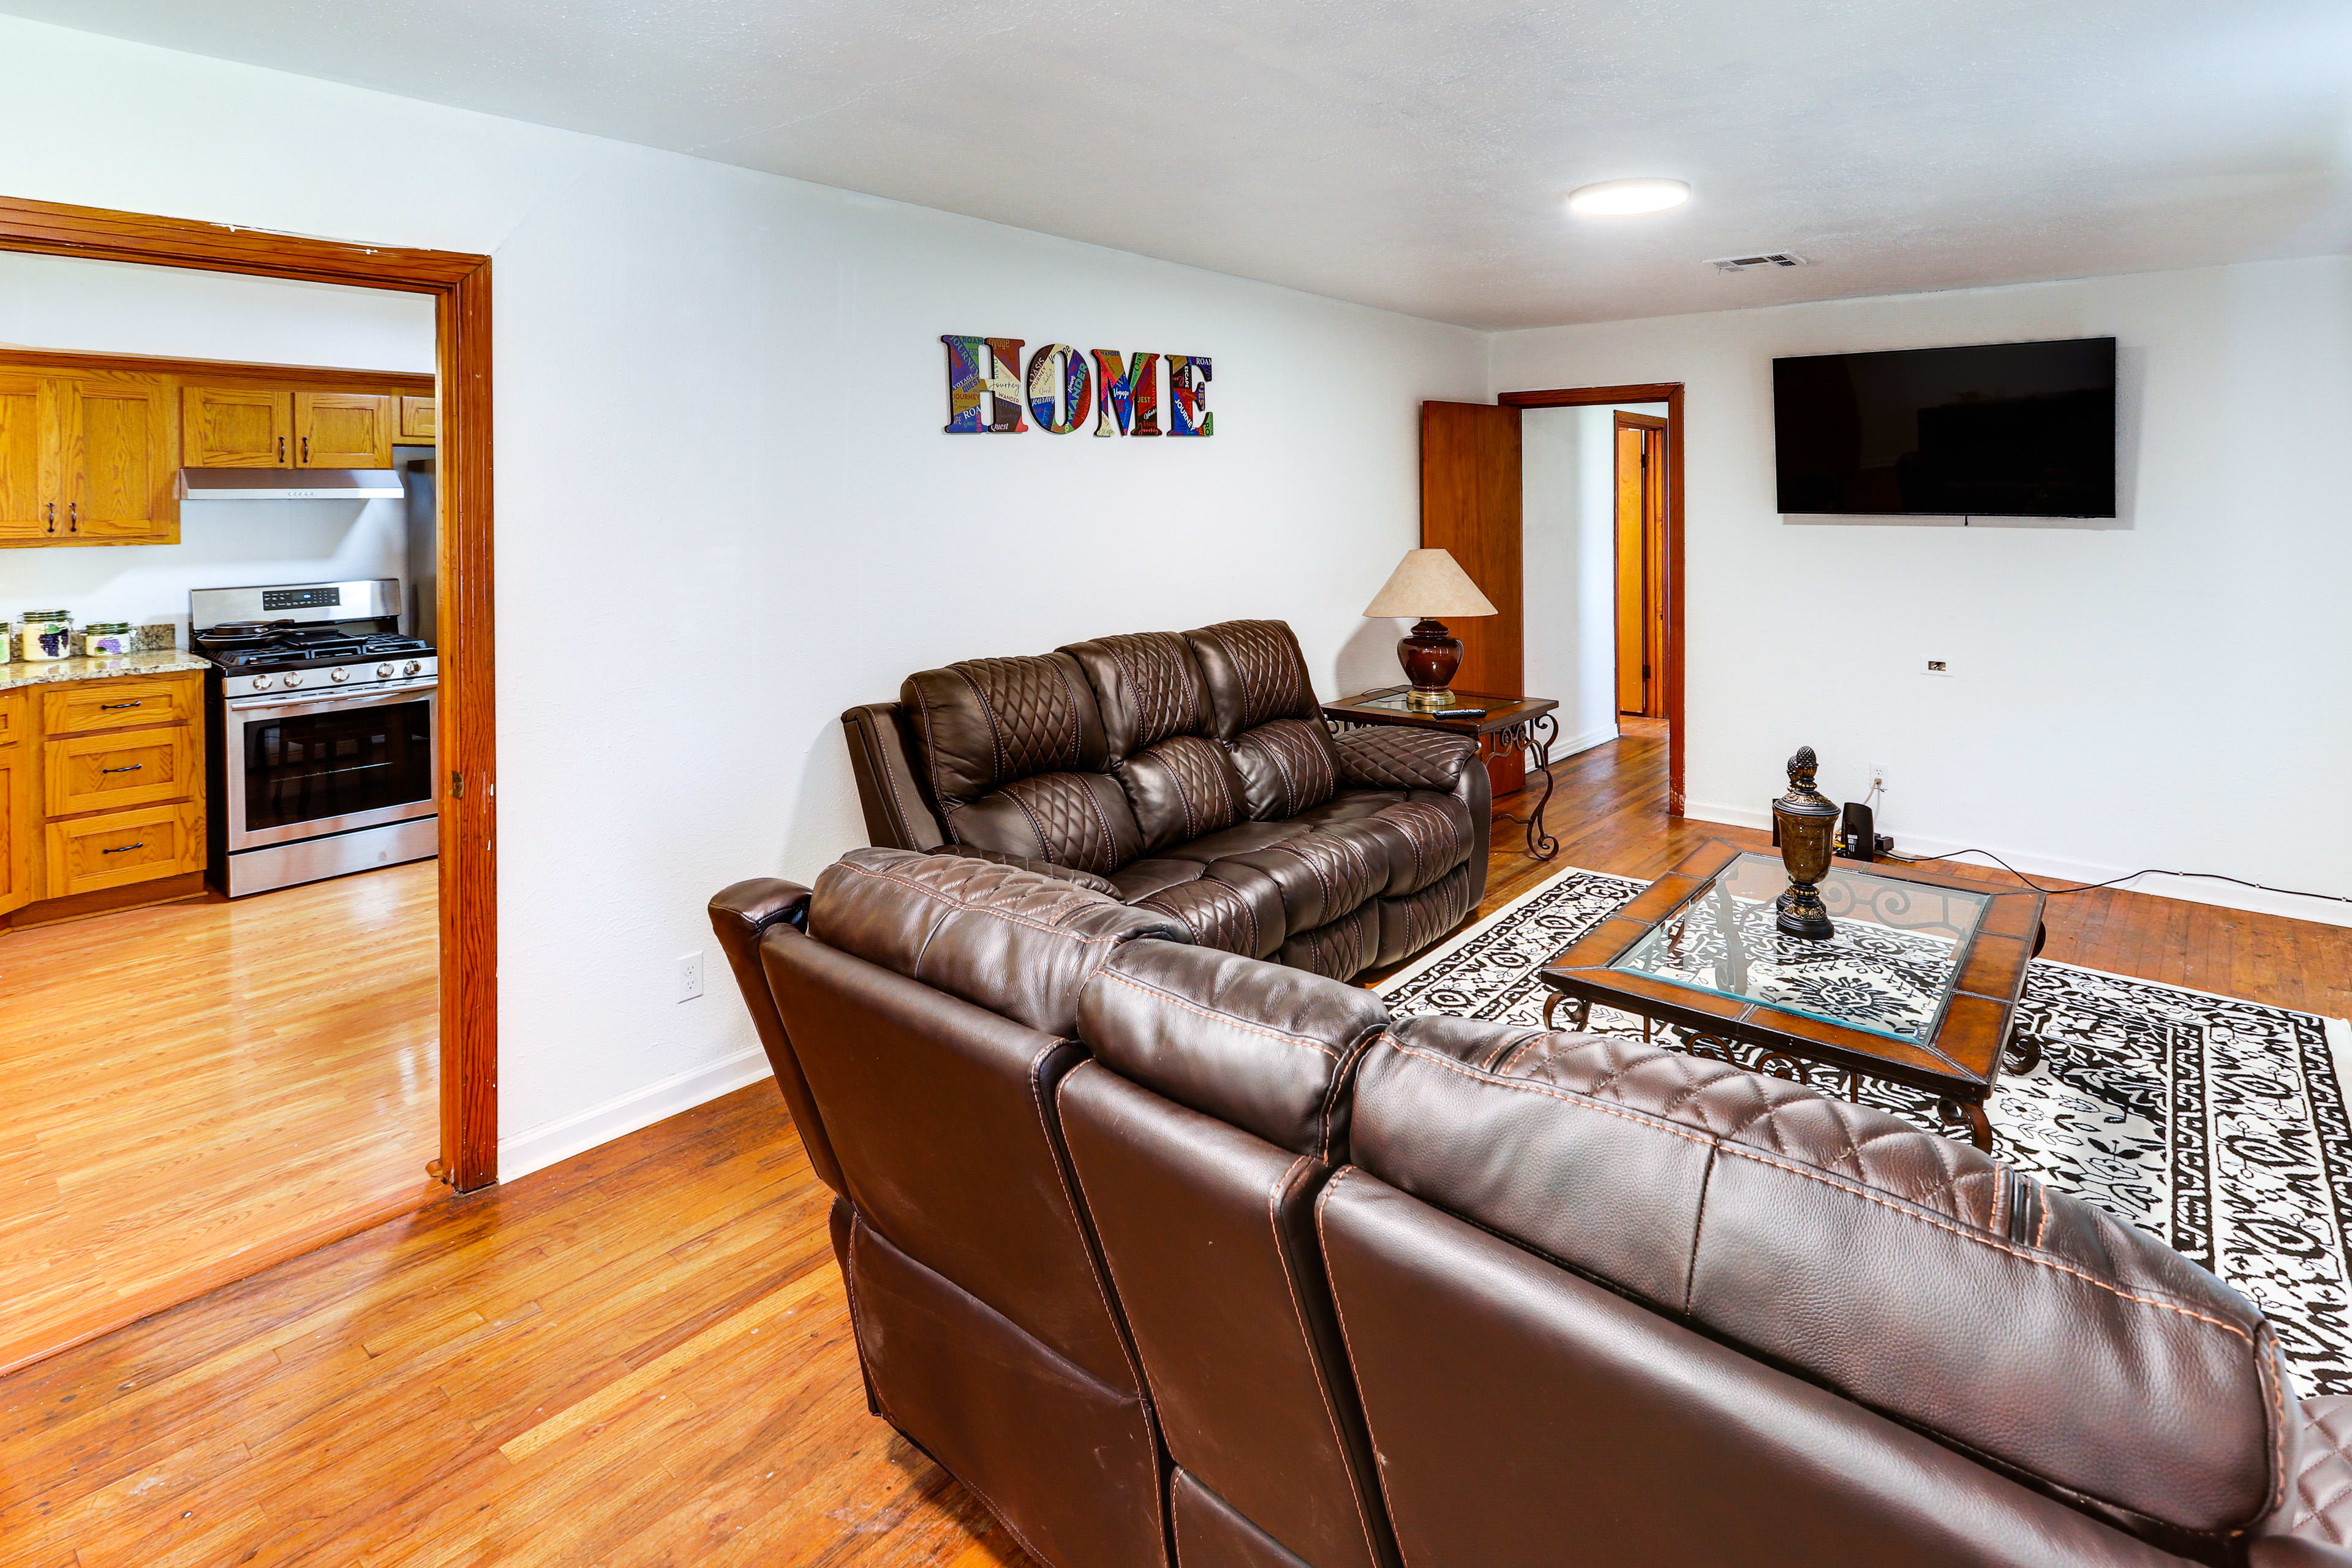 Living Room | Smart TV | Recliner Sofas | Single-Story Home